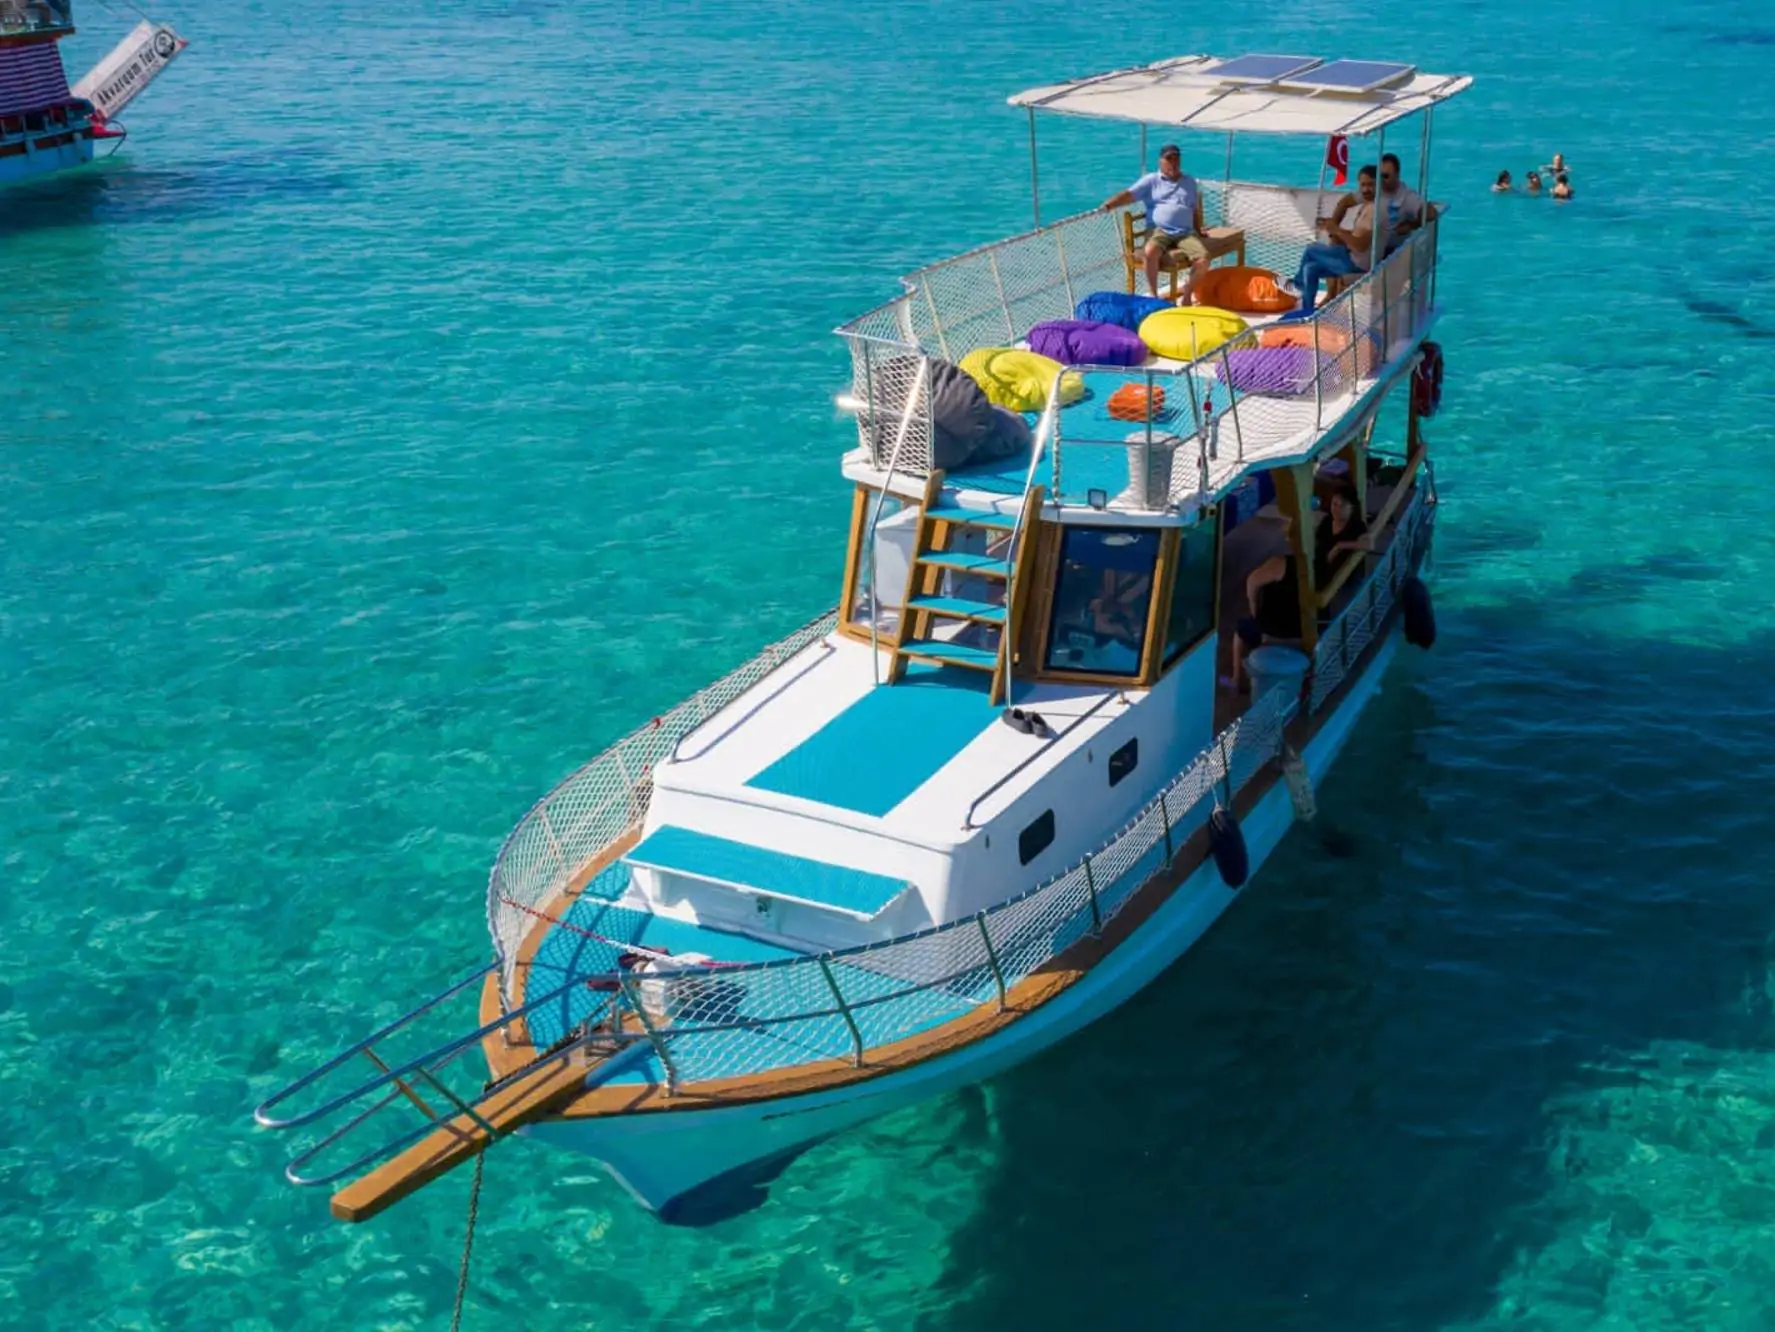 Bademli Dikili Daily Tour Boat